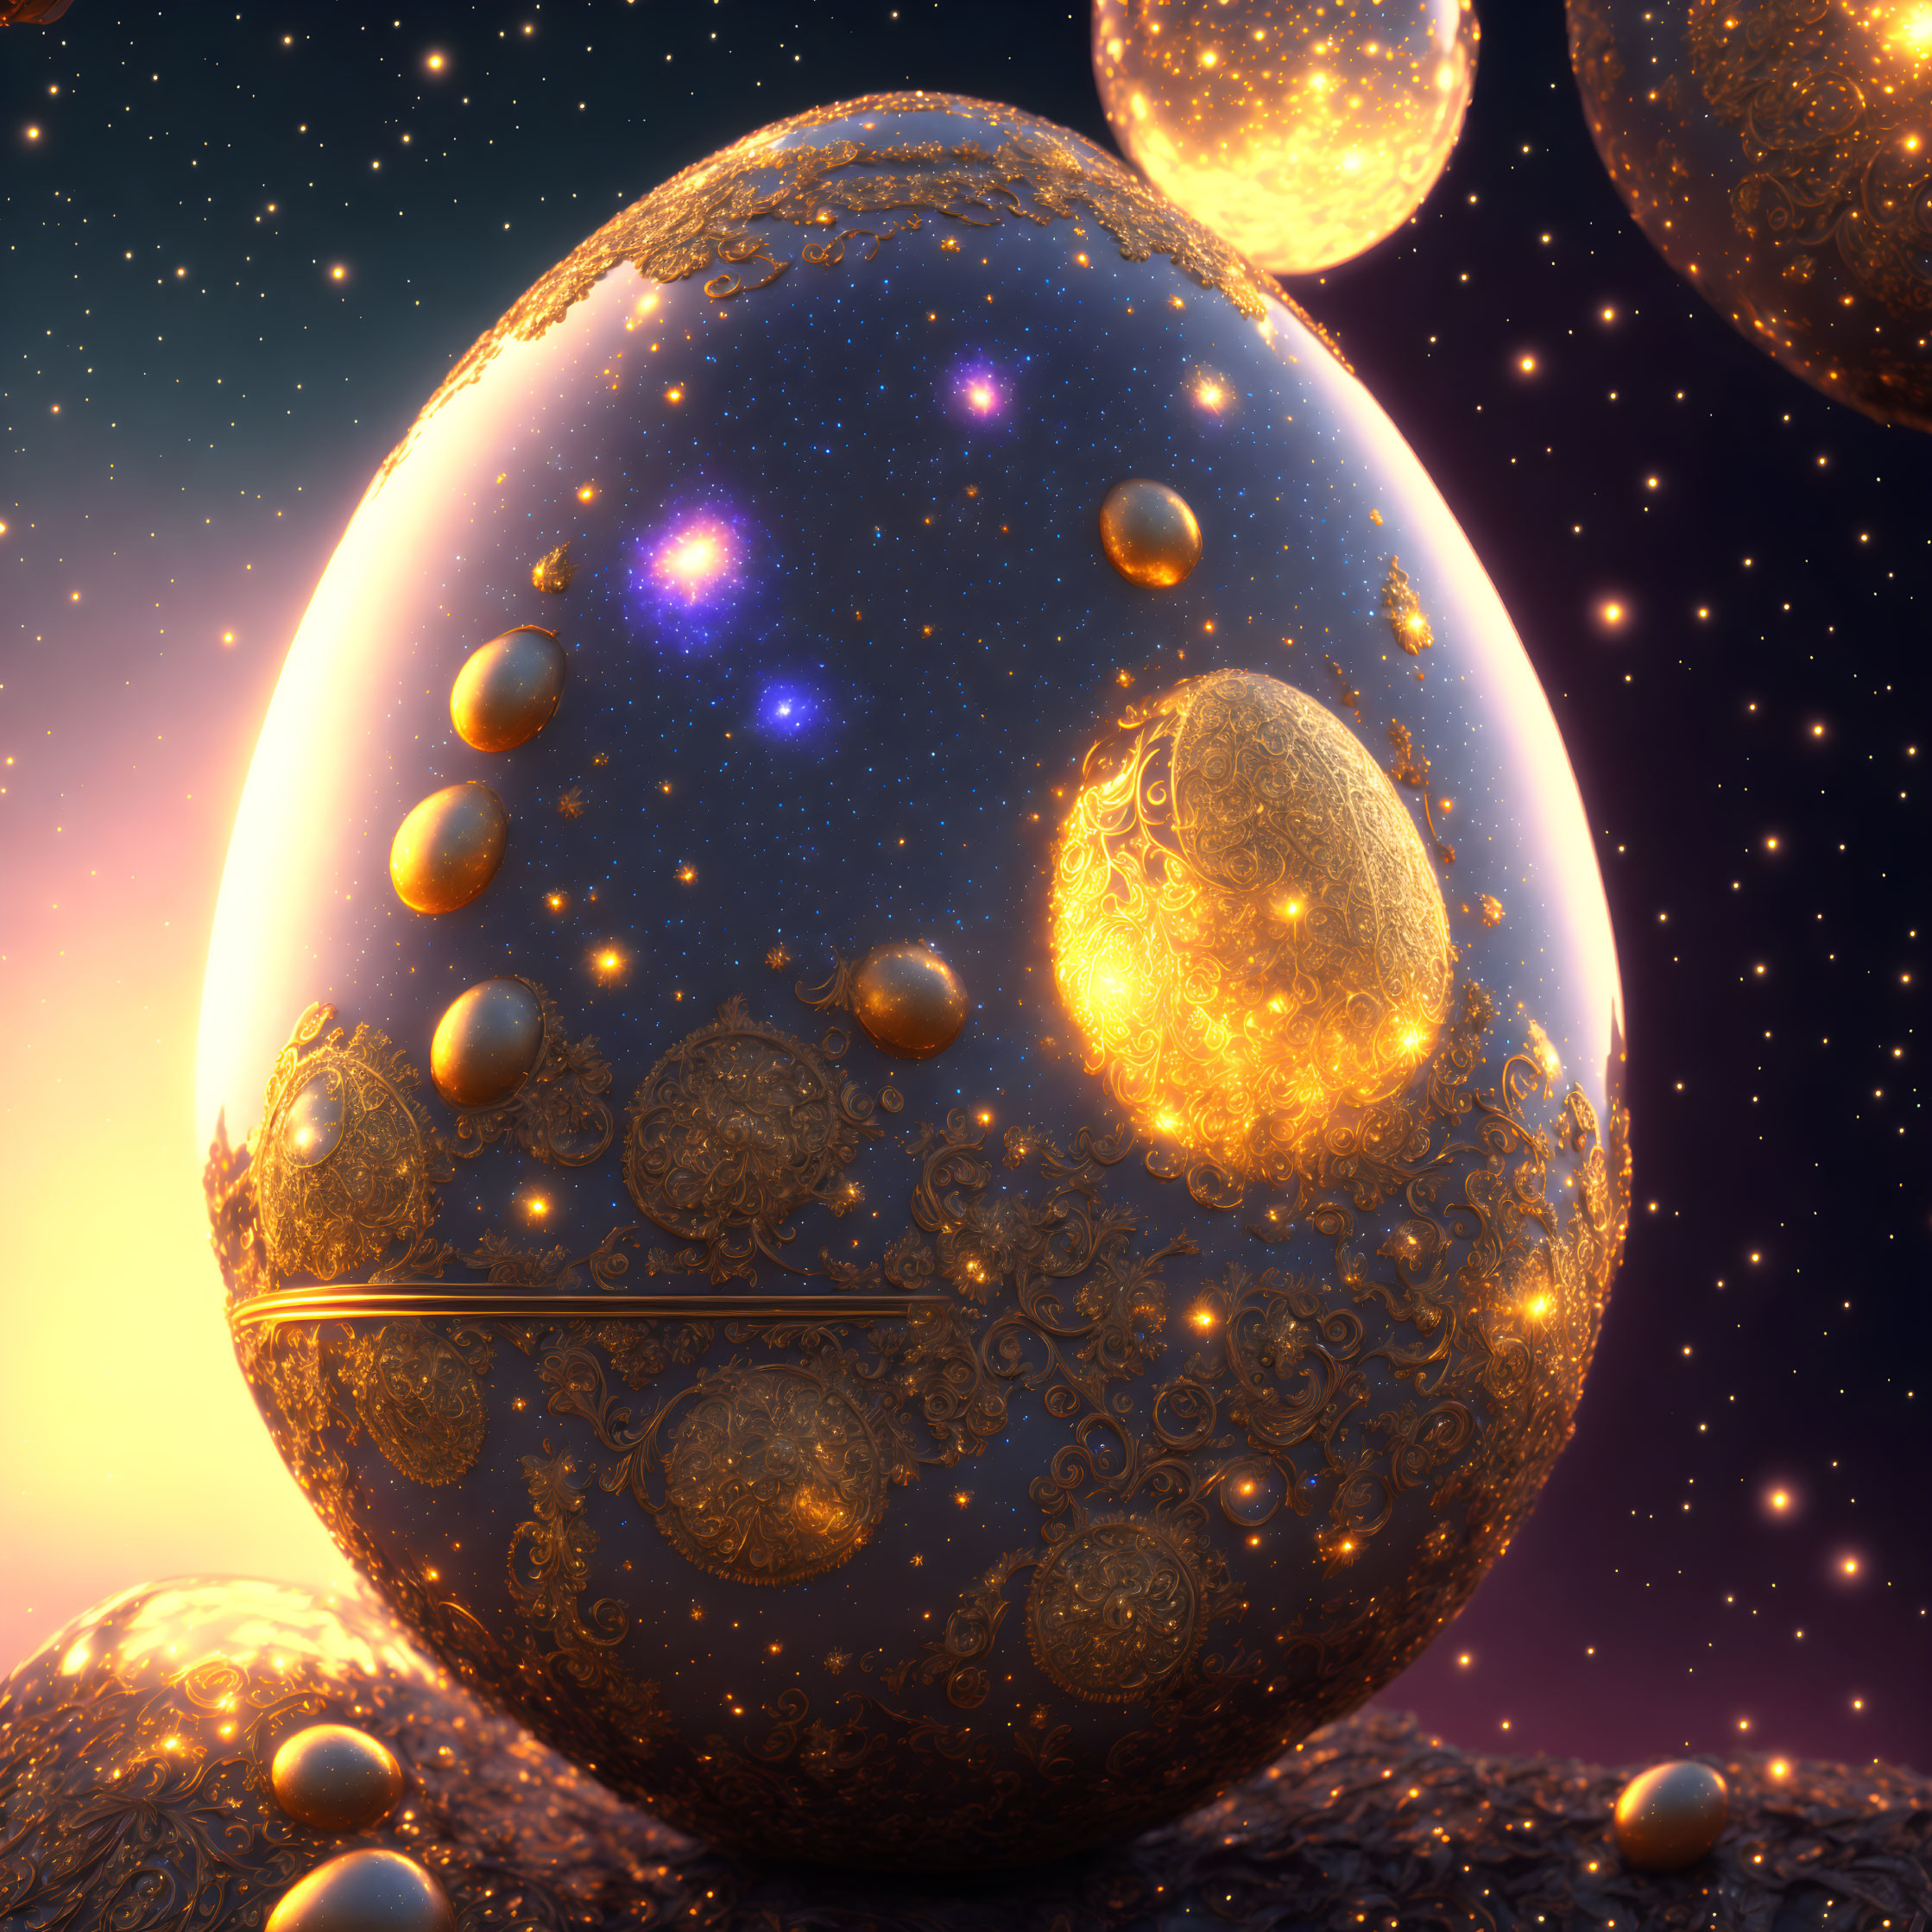 Intricate Golden Cosmic Egg Among Celestial Bodies